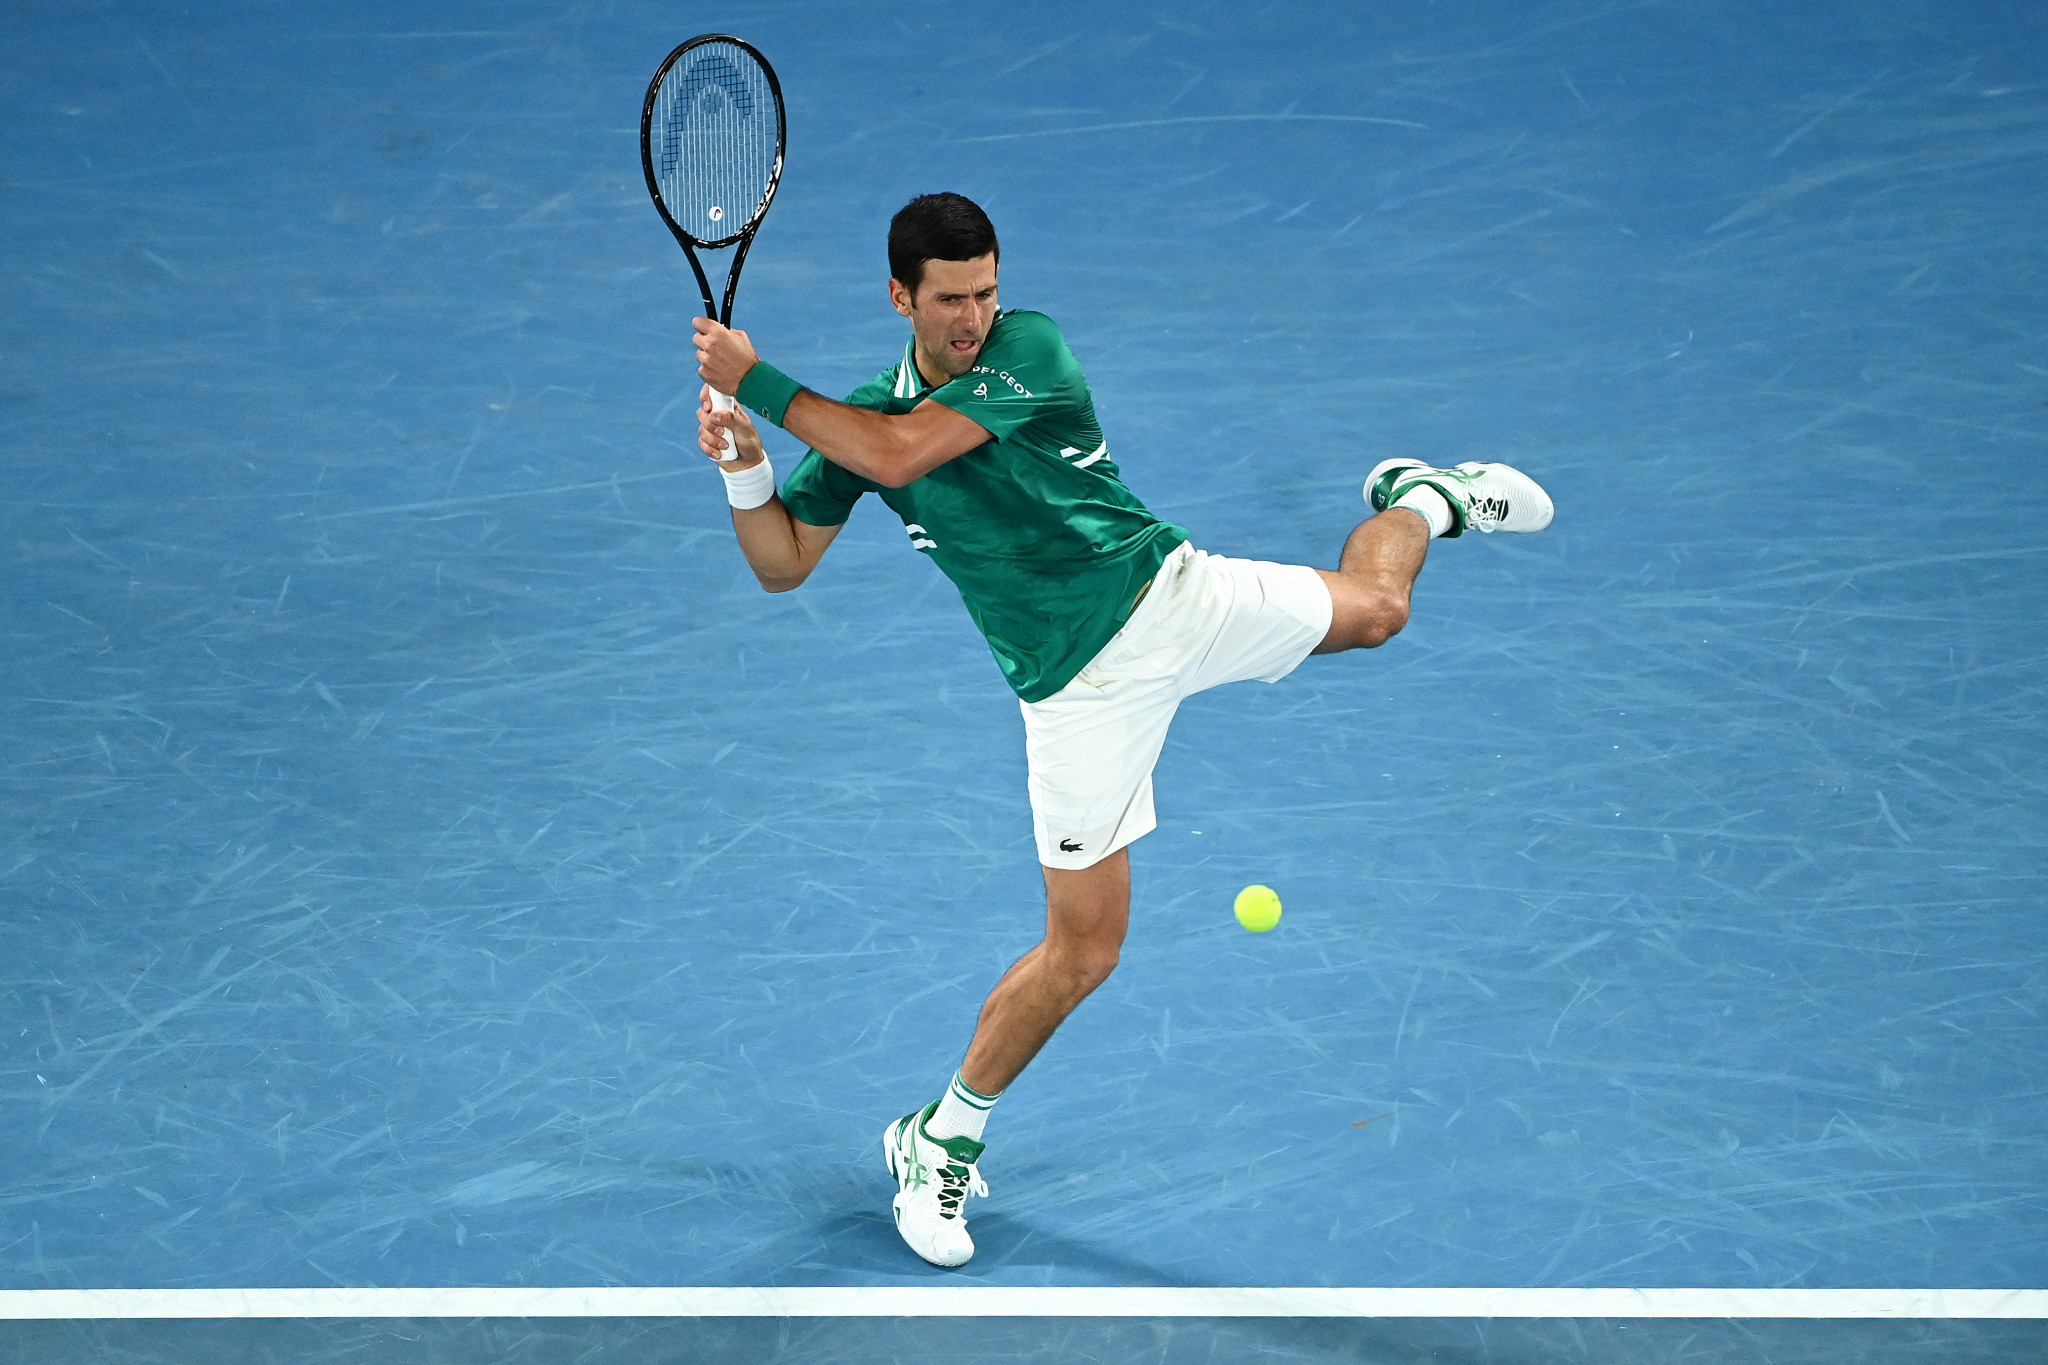 Men’s defending champion Djokovic among winners on first day of Australian Open